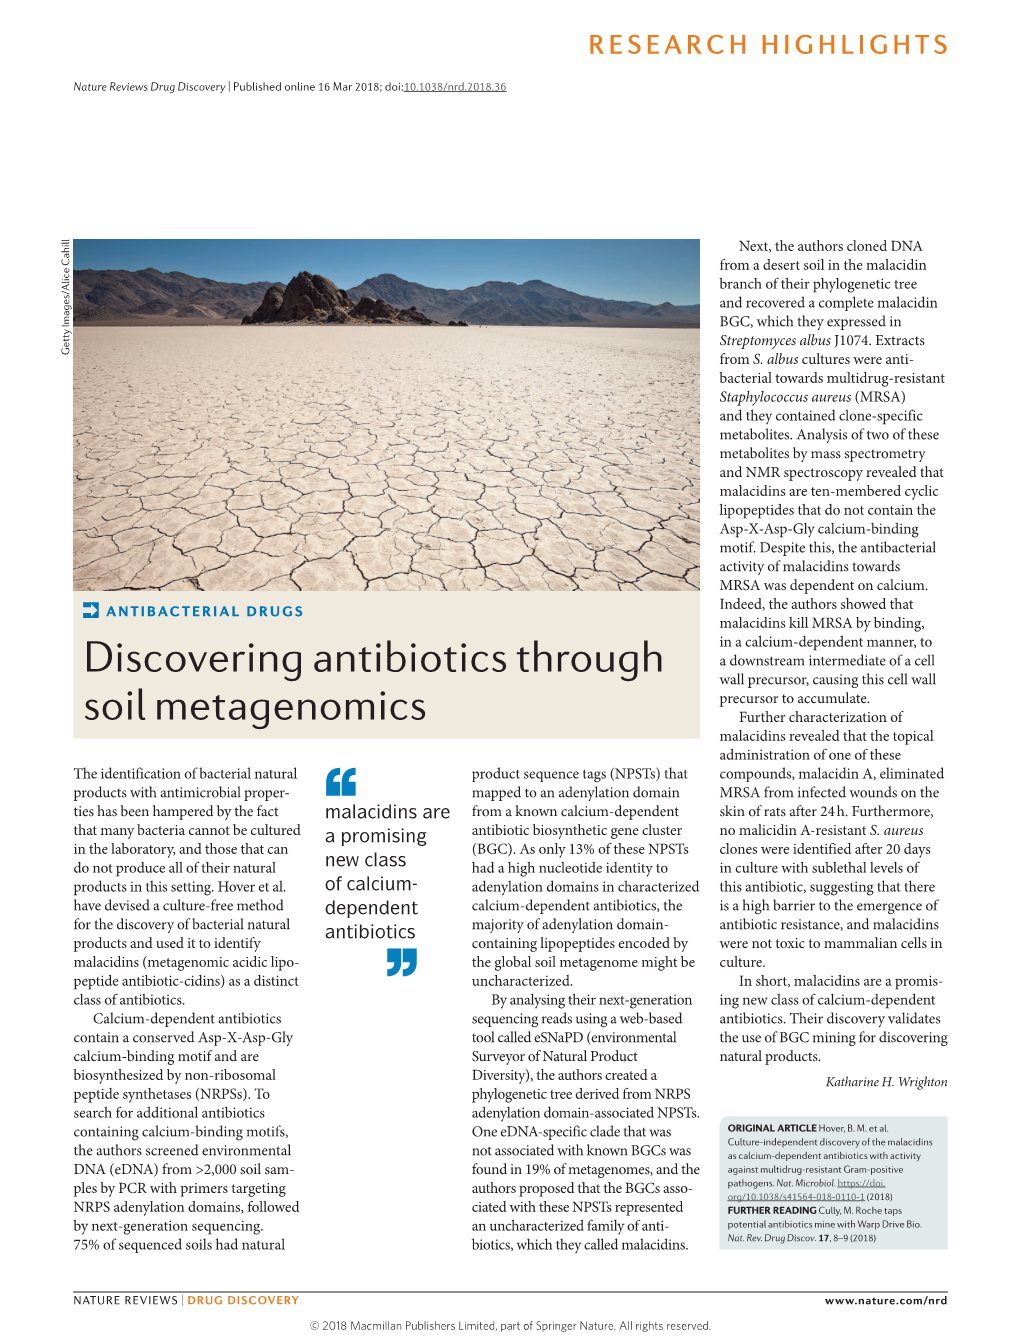 Antibacterial Drugs: Discovering Antibiotics Through Soil Metagenomics